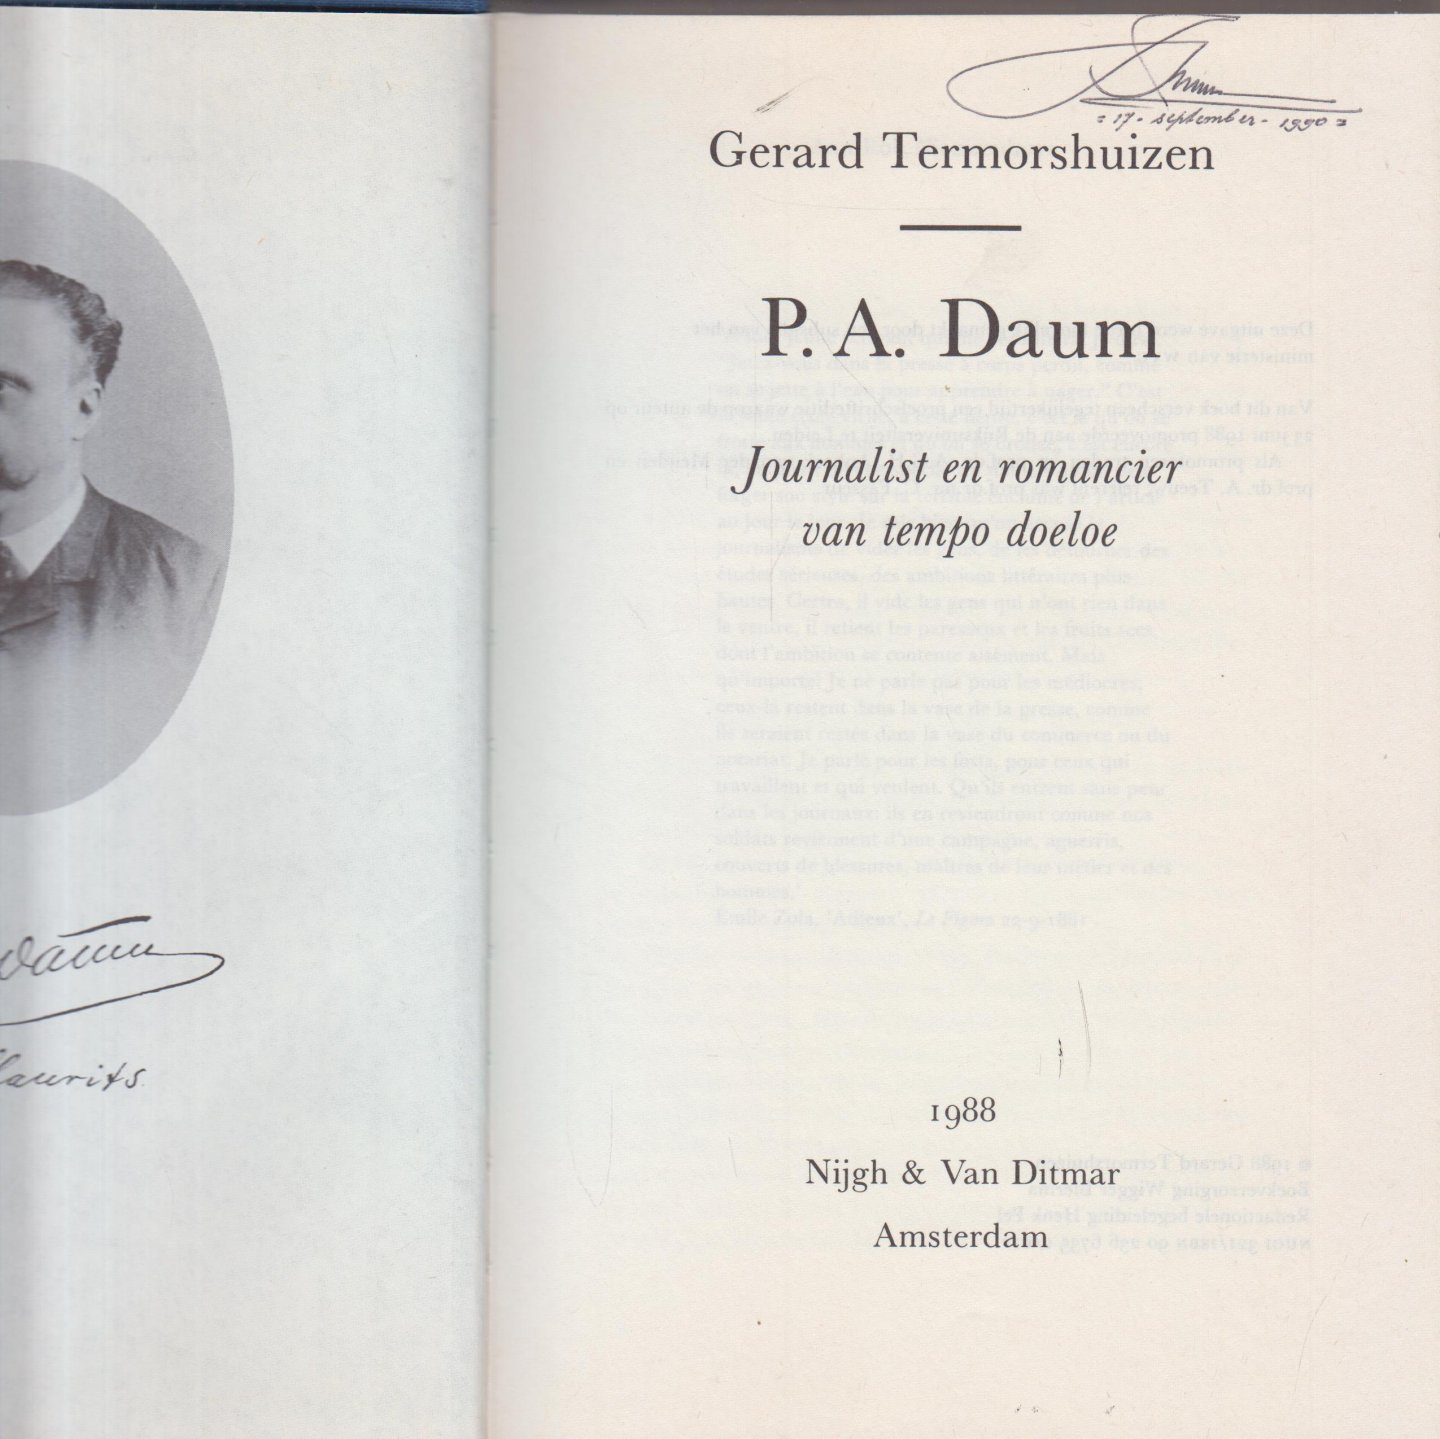 Termorshuizen (Rotterdam 2 januari 1935), dr Gerard - P. A. Daum - Journalist en romancier van tempo doeloe - Gesigneerd 17 september 1990 - Paulus Adrianus Daum (Den Haag, 3 augustus 1850 - Laag-Soeren, 14 september 1898 pseudoniem Maurits)